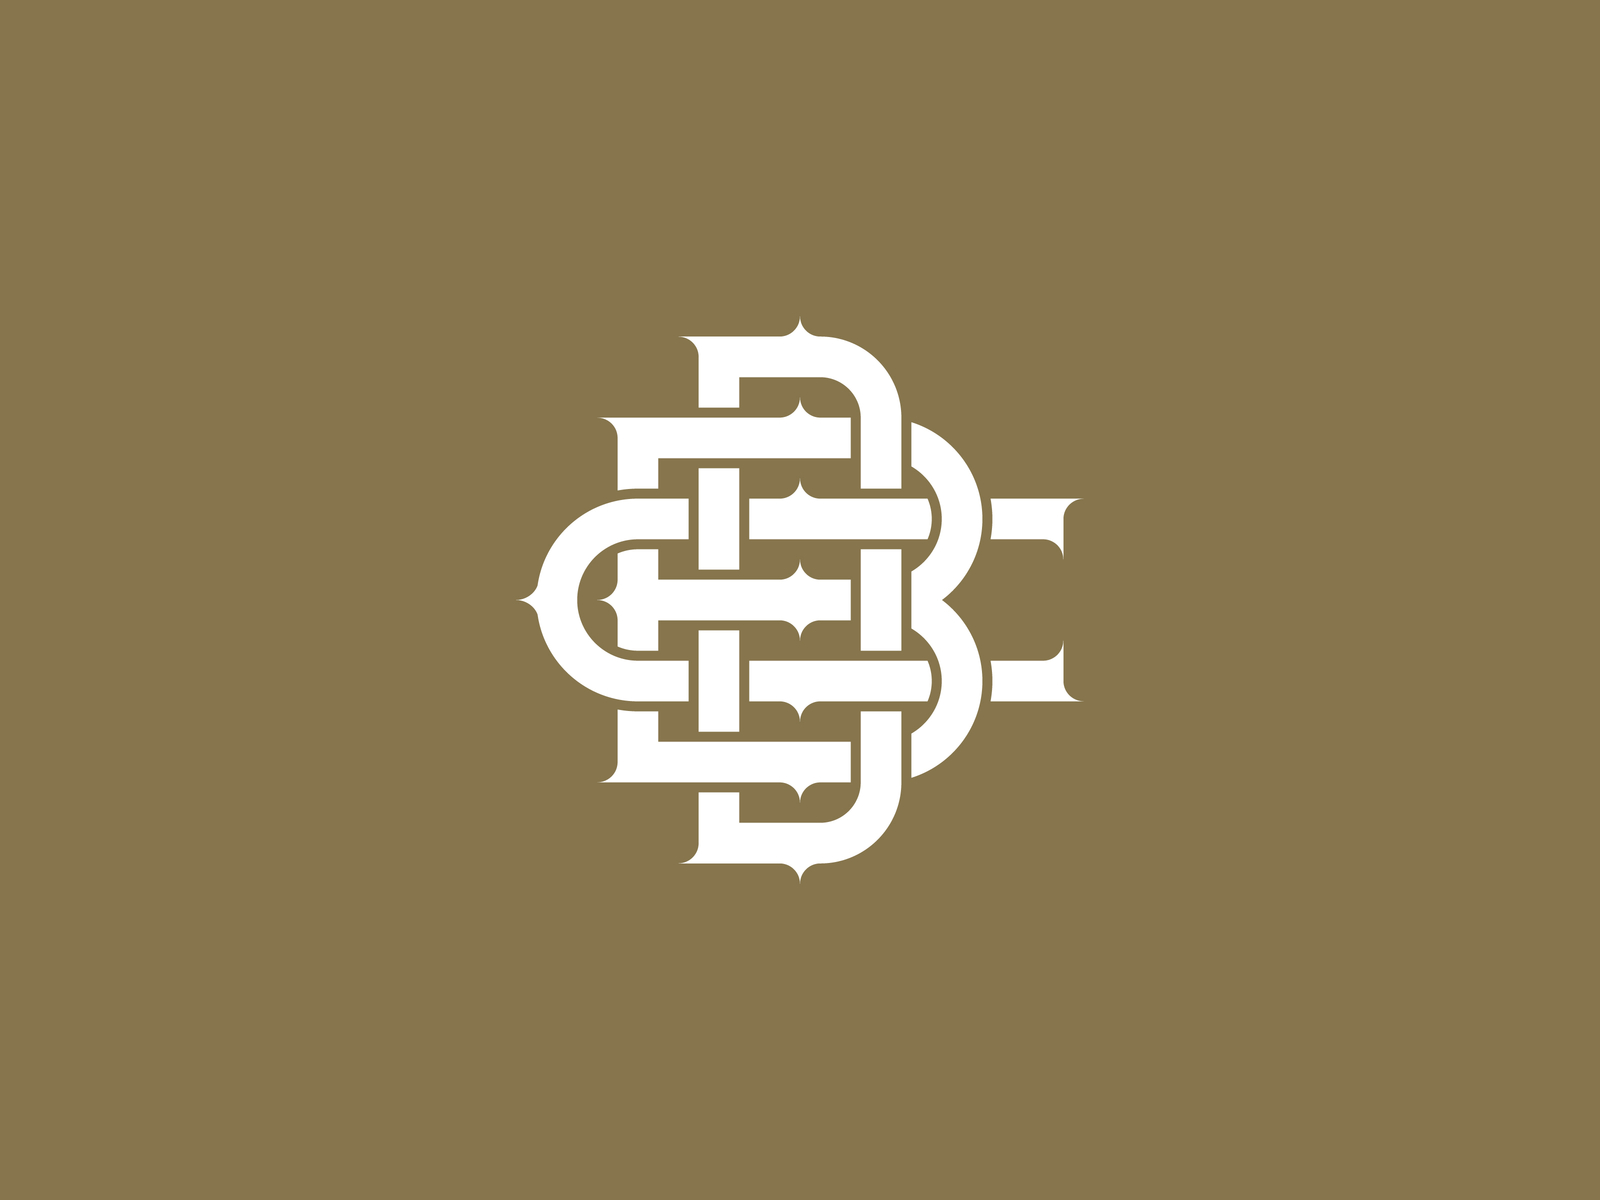 CBD Monogram Logo by Tuyệt Duyệt on Dribbble